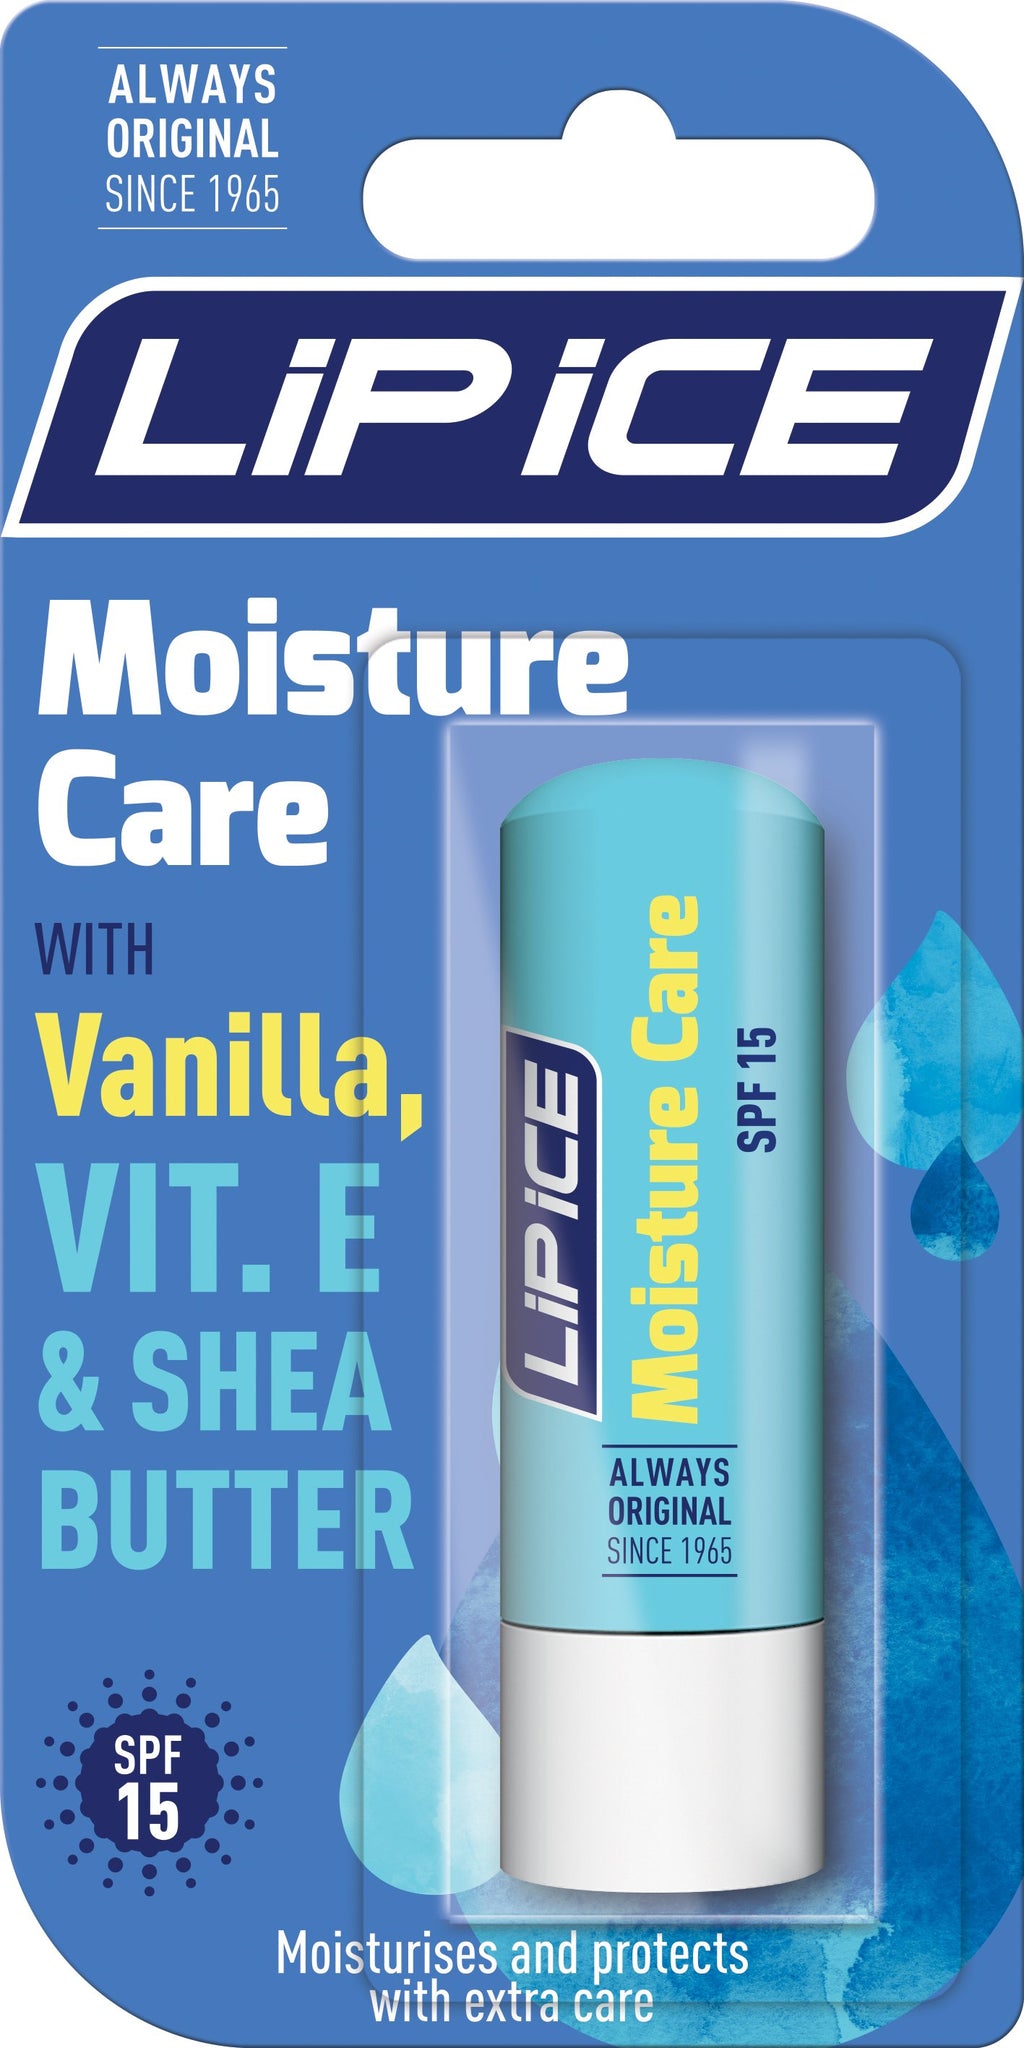 Lip Ice Moisture Care - 1's